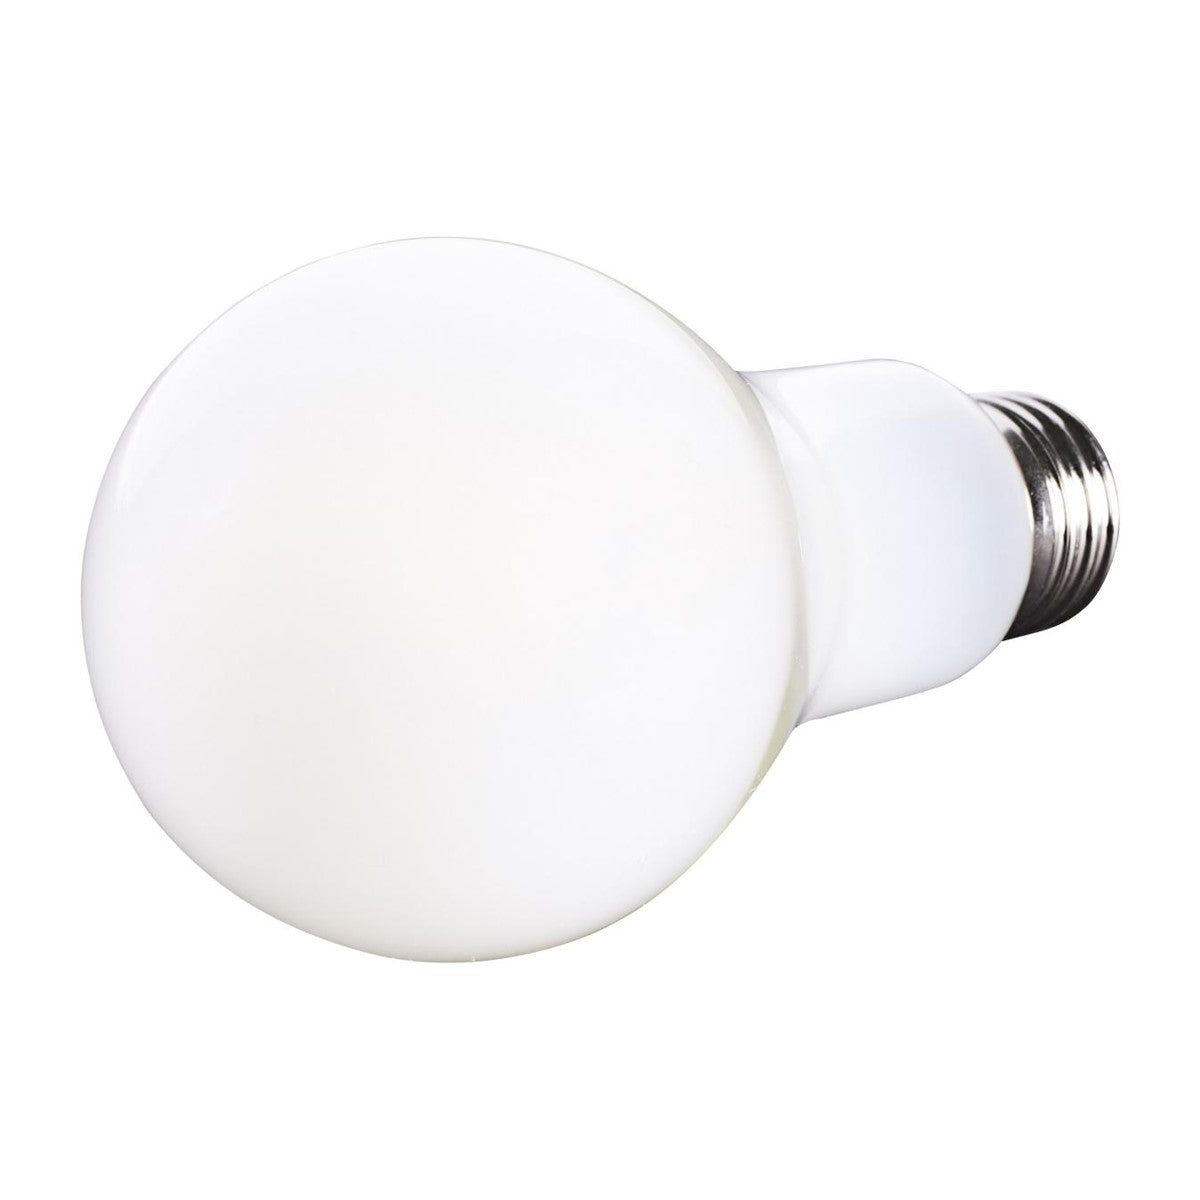 A21 LED Bulb, 17 Watt, 2000 Lumens, 5000K, E26 Medium Base, Frosted Finish - Bees Lighting